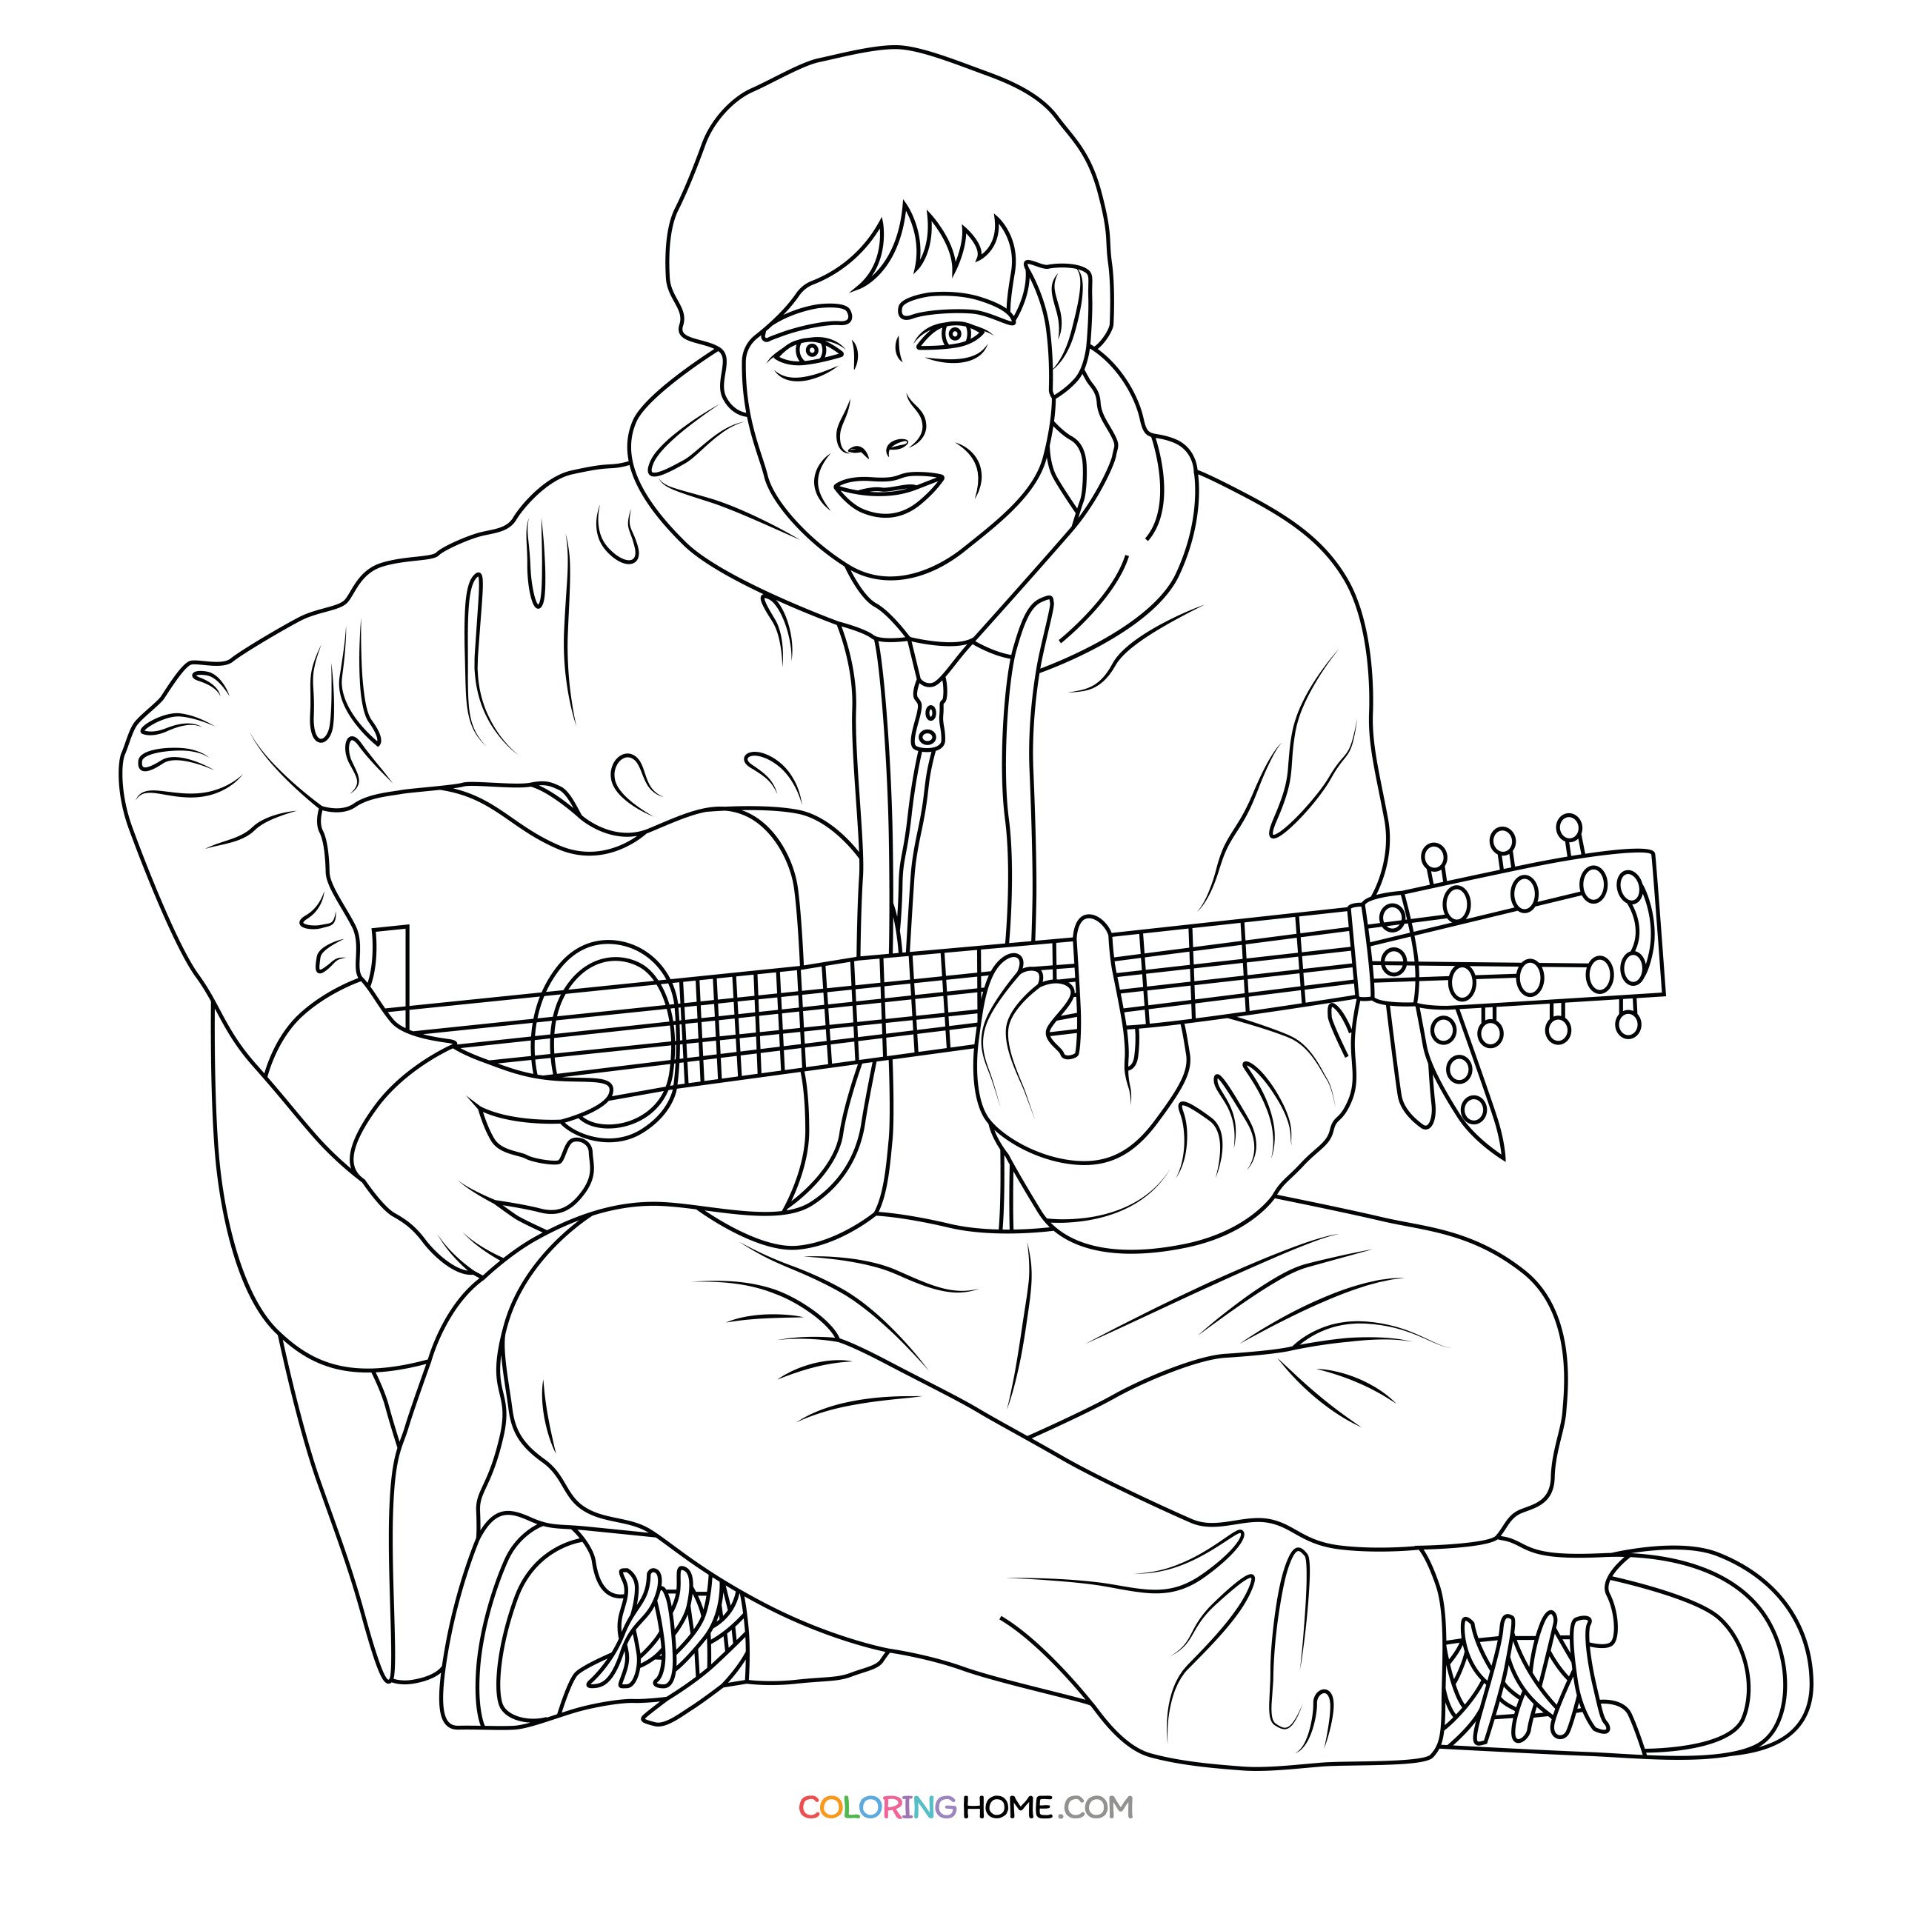 Ed Sheeran Coloring Page - Coloring Home